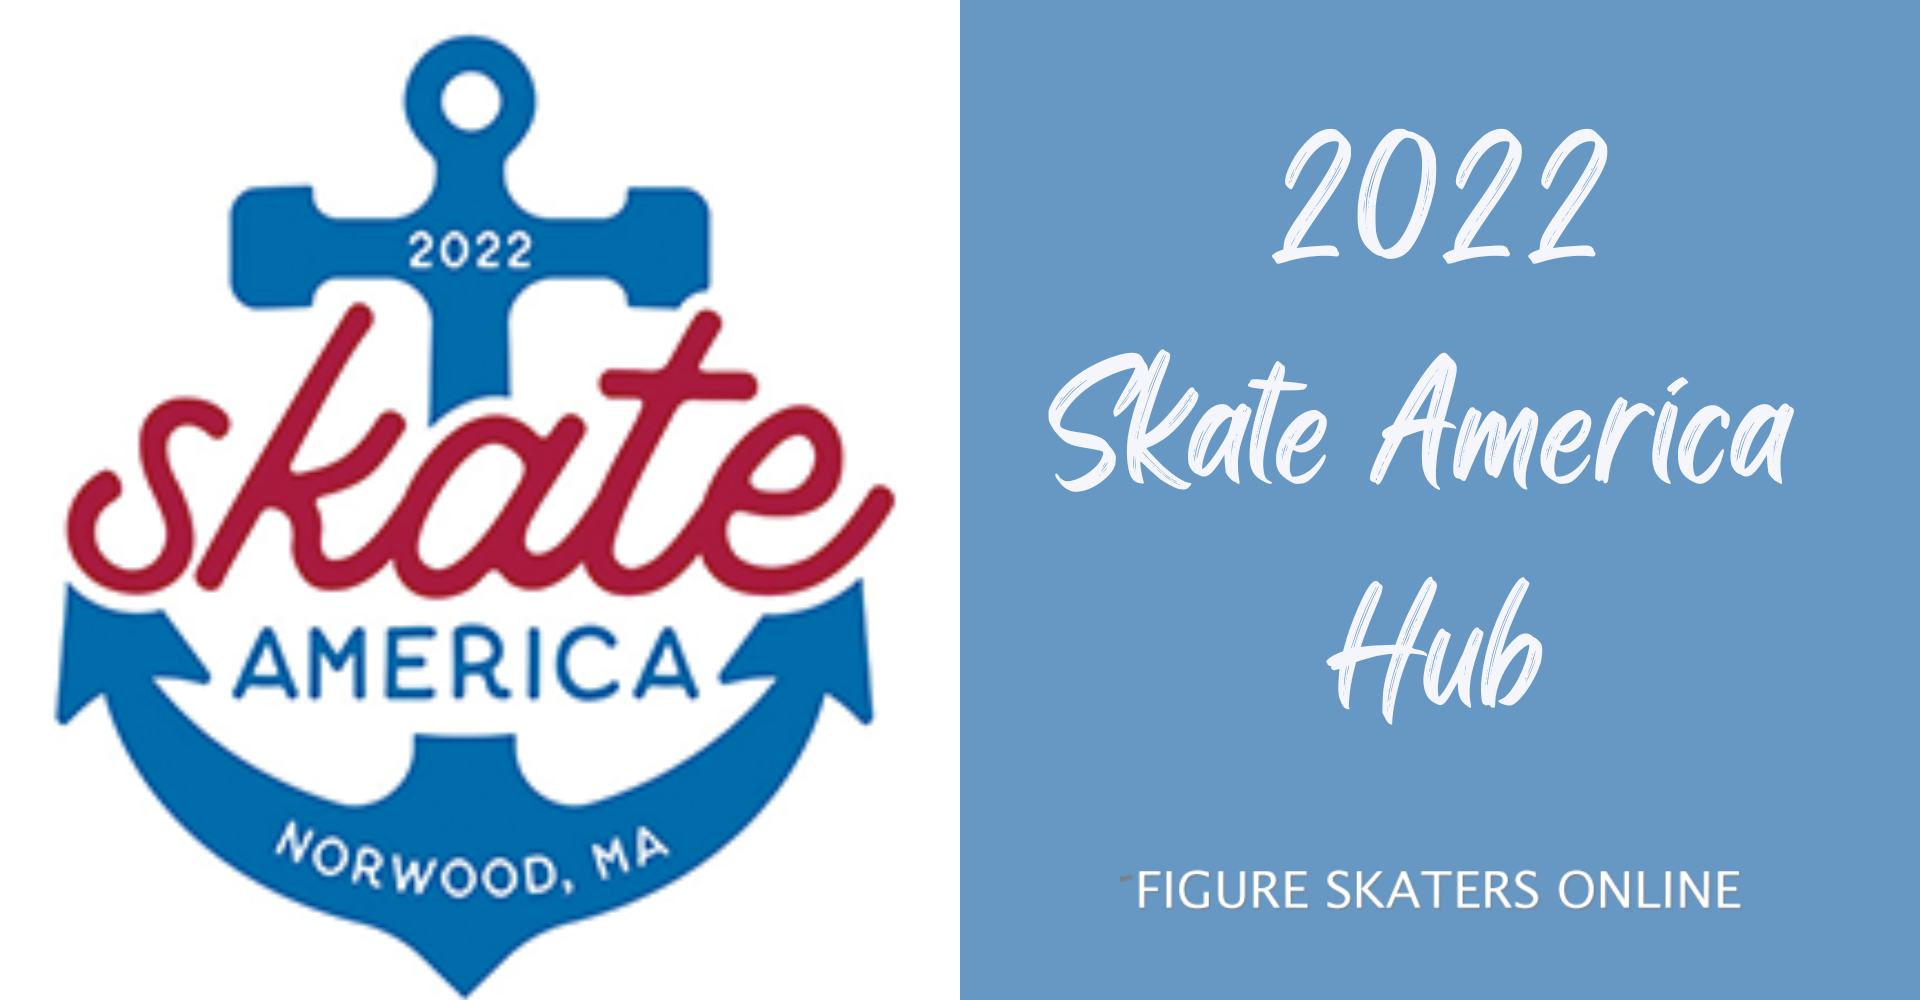 2022 Skate America Hub – Figure Skaters Online